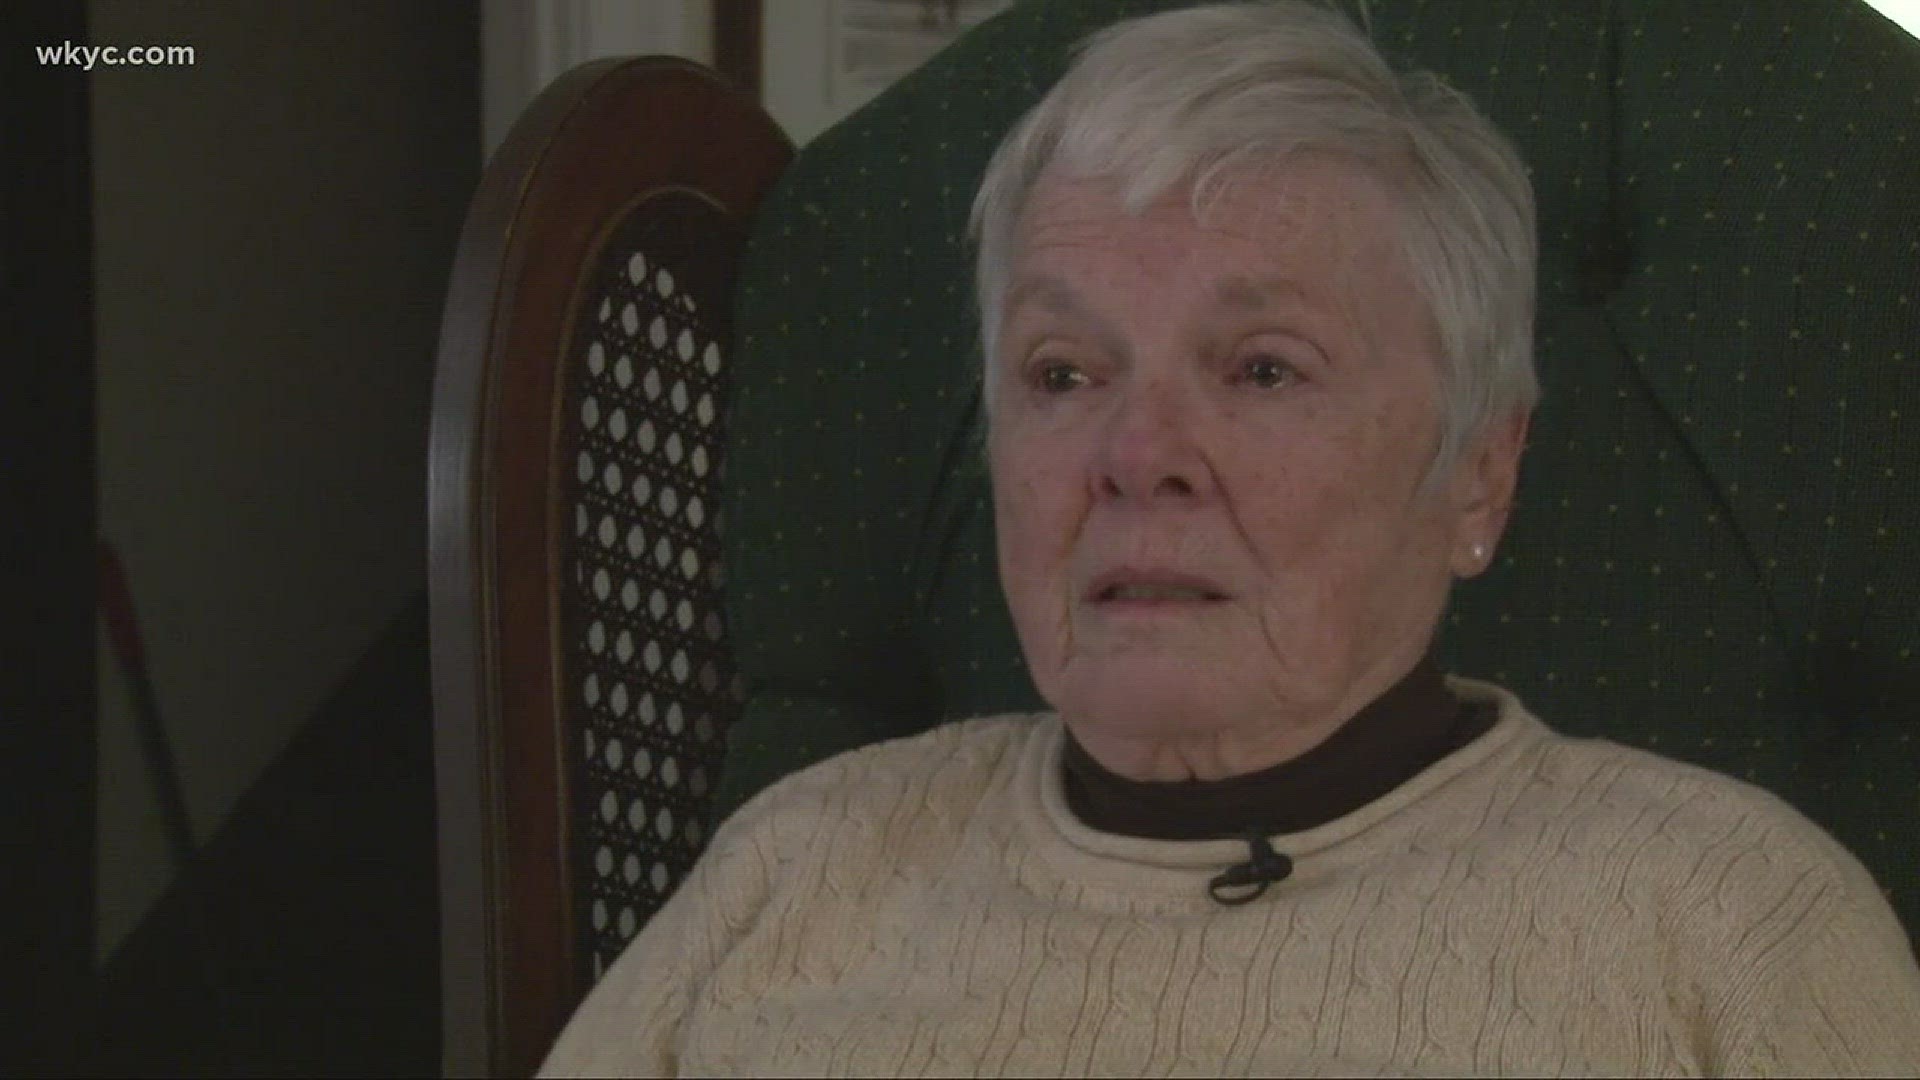 Hawaii missile panic hits home for Ohio grandmother